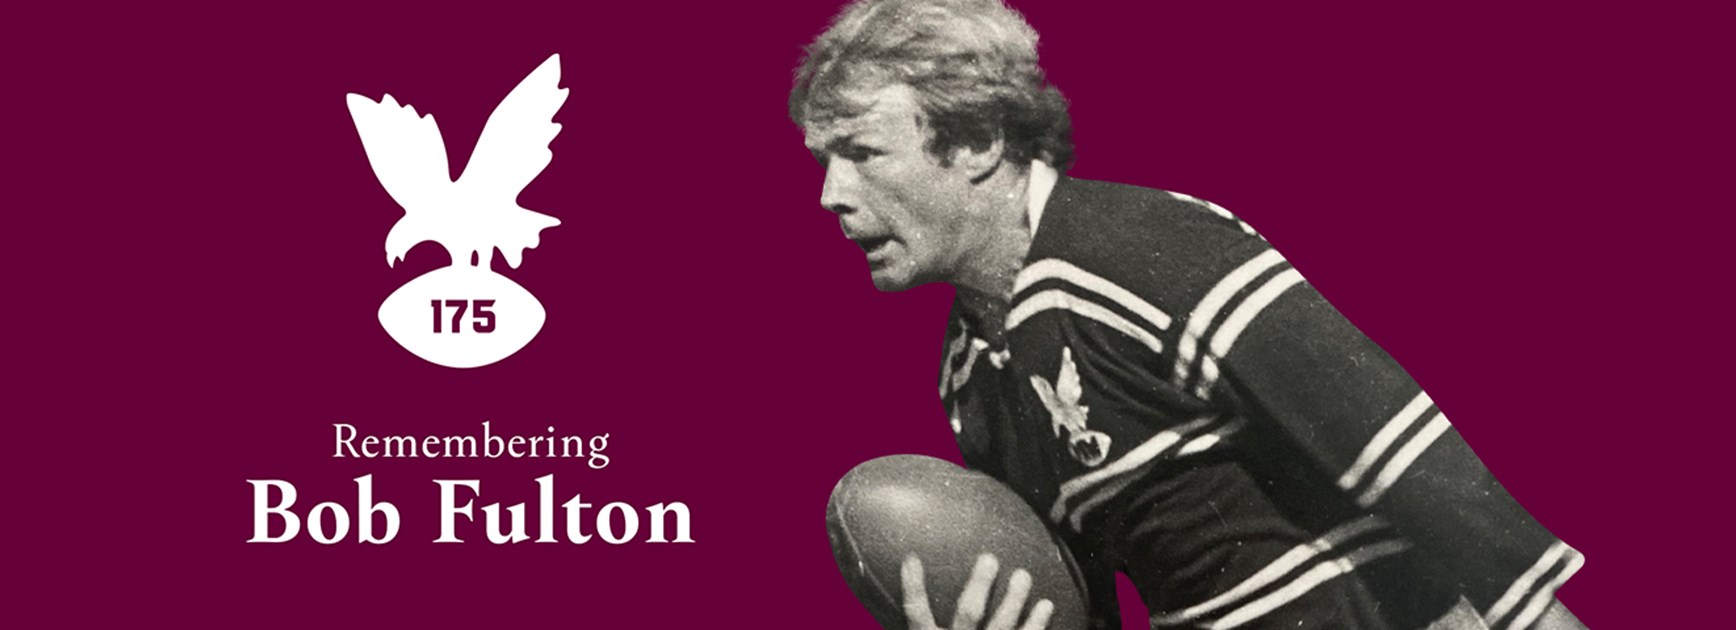 Sea Eagles 'Remembering Bob Fulton' this Friday night versus Cowboys